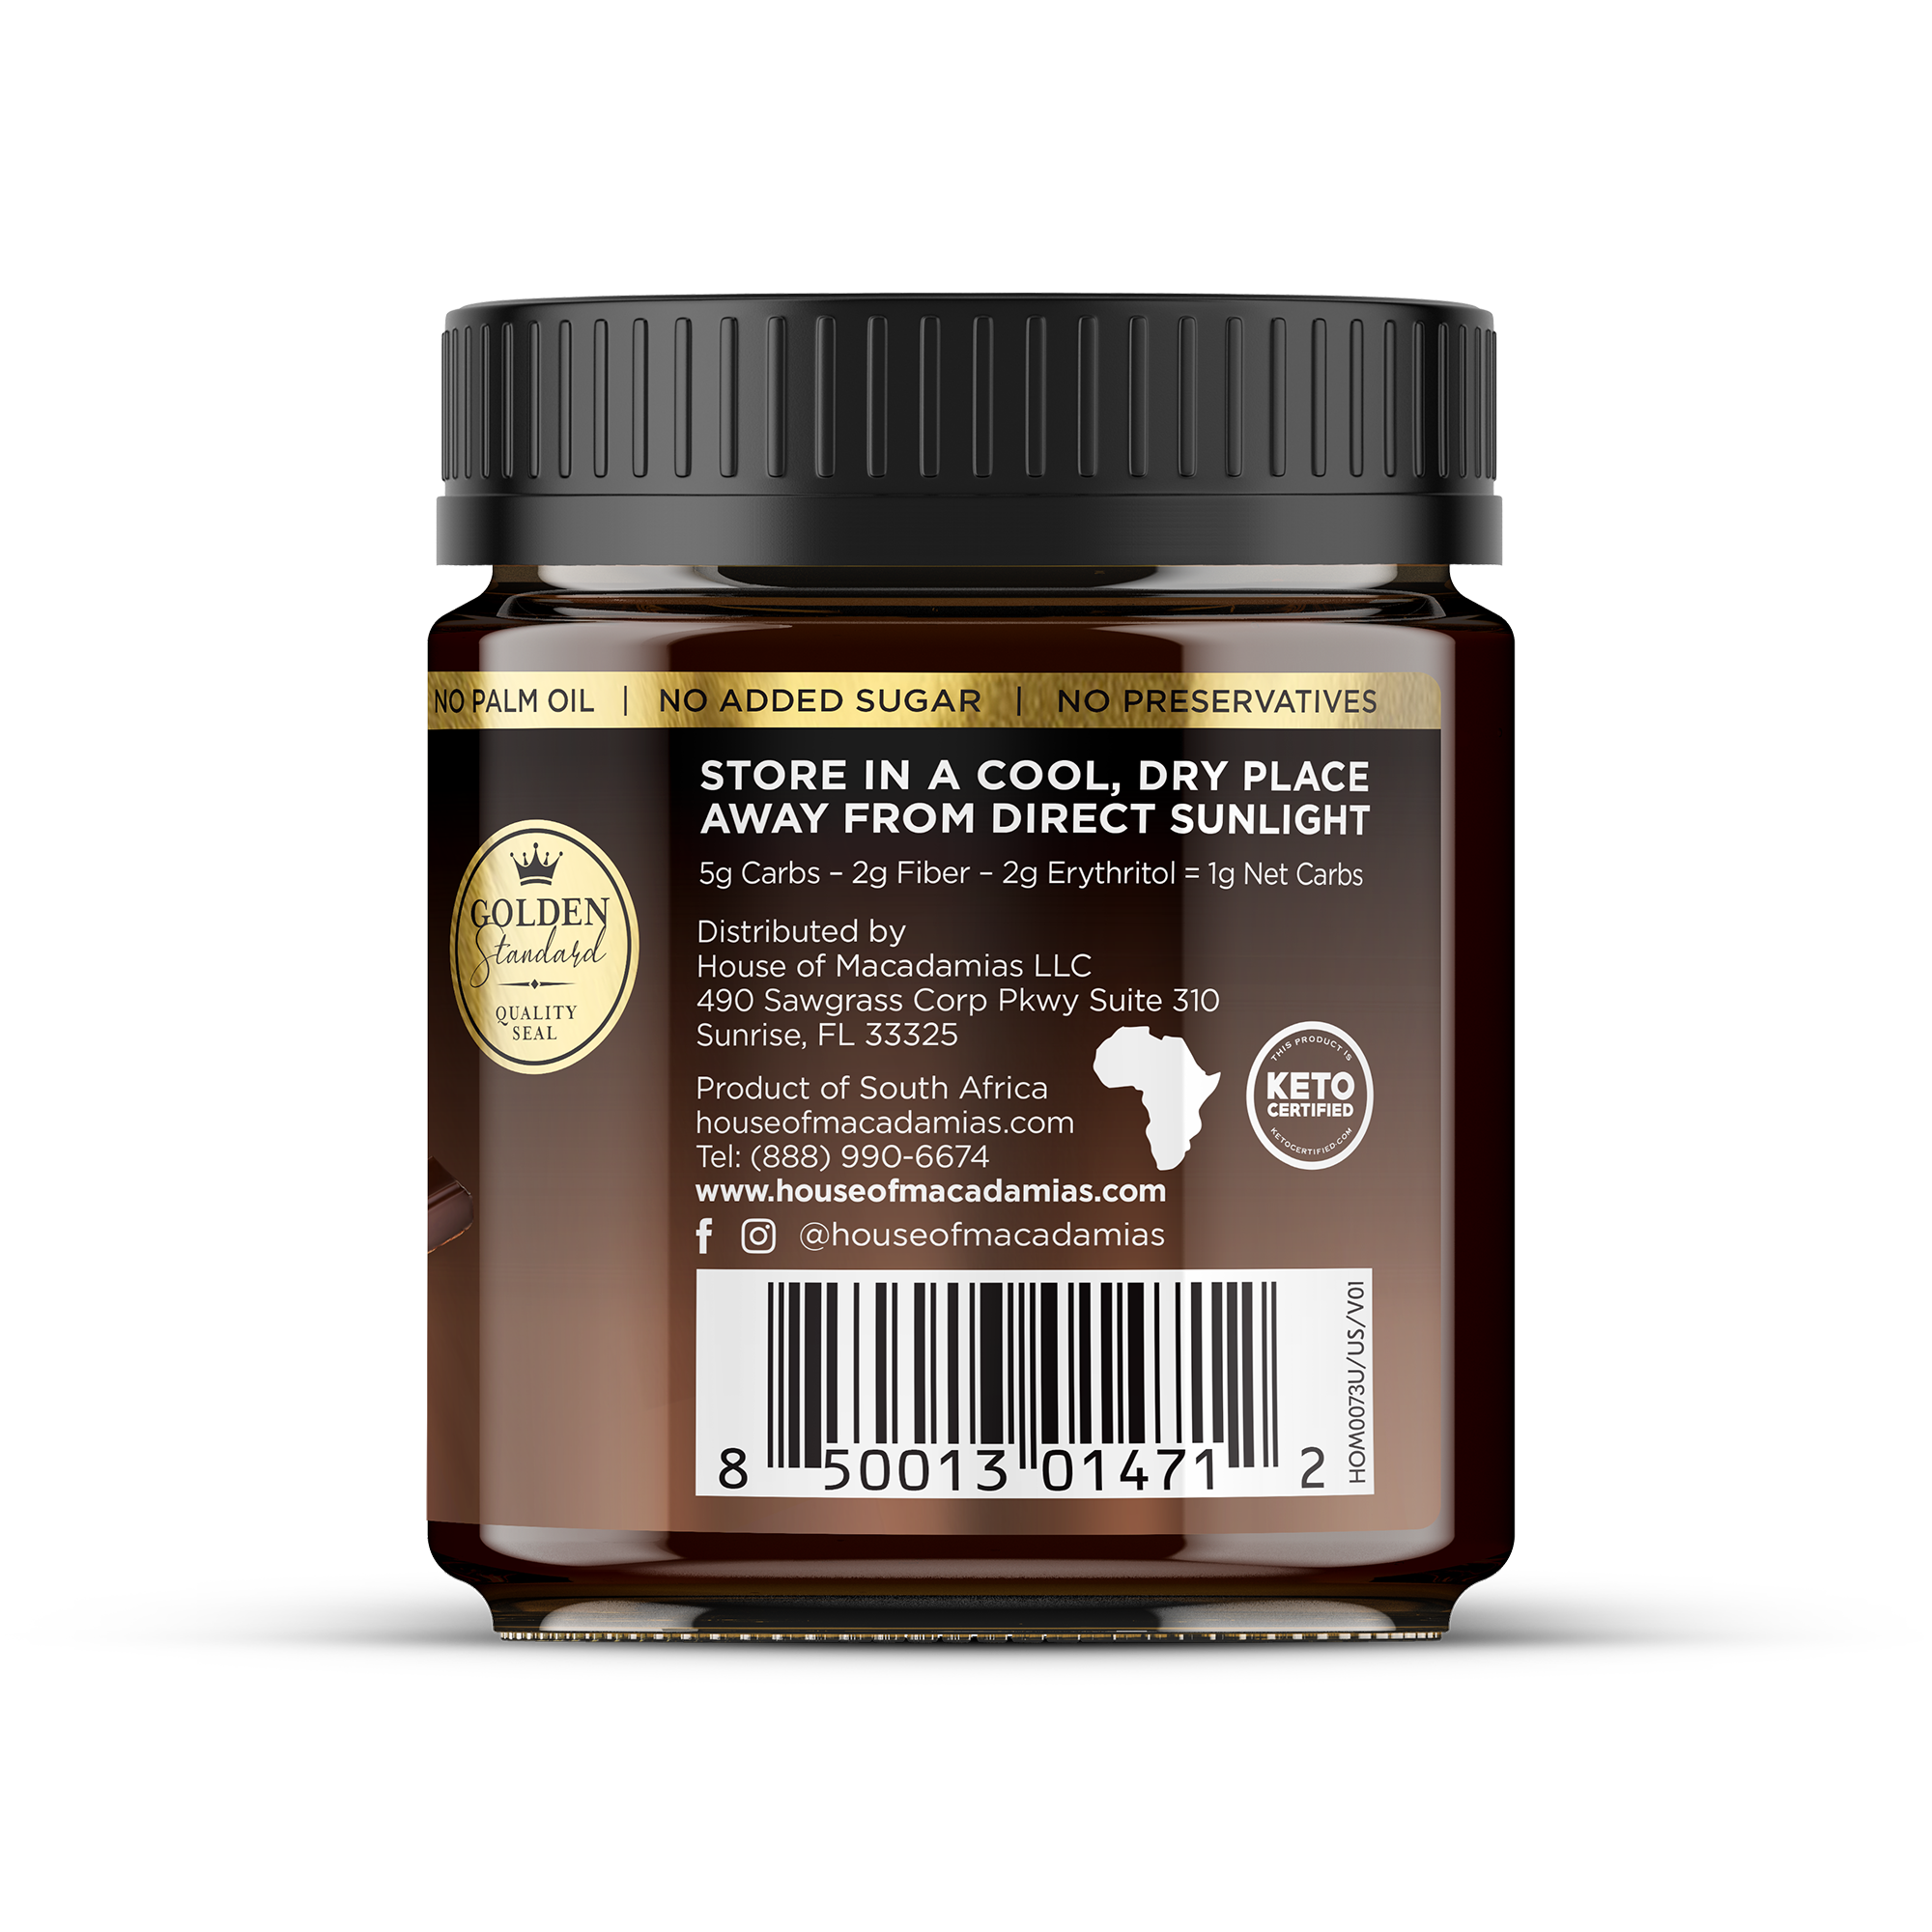 Macadamia Nut Butter – Chocolate (250g)